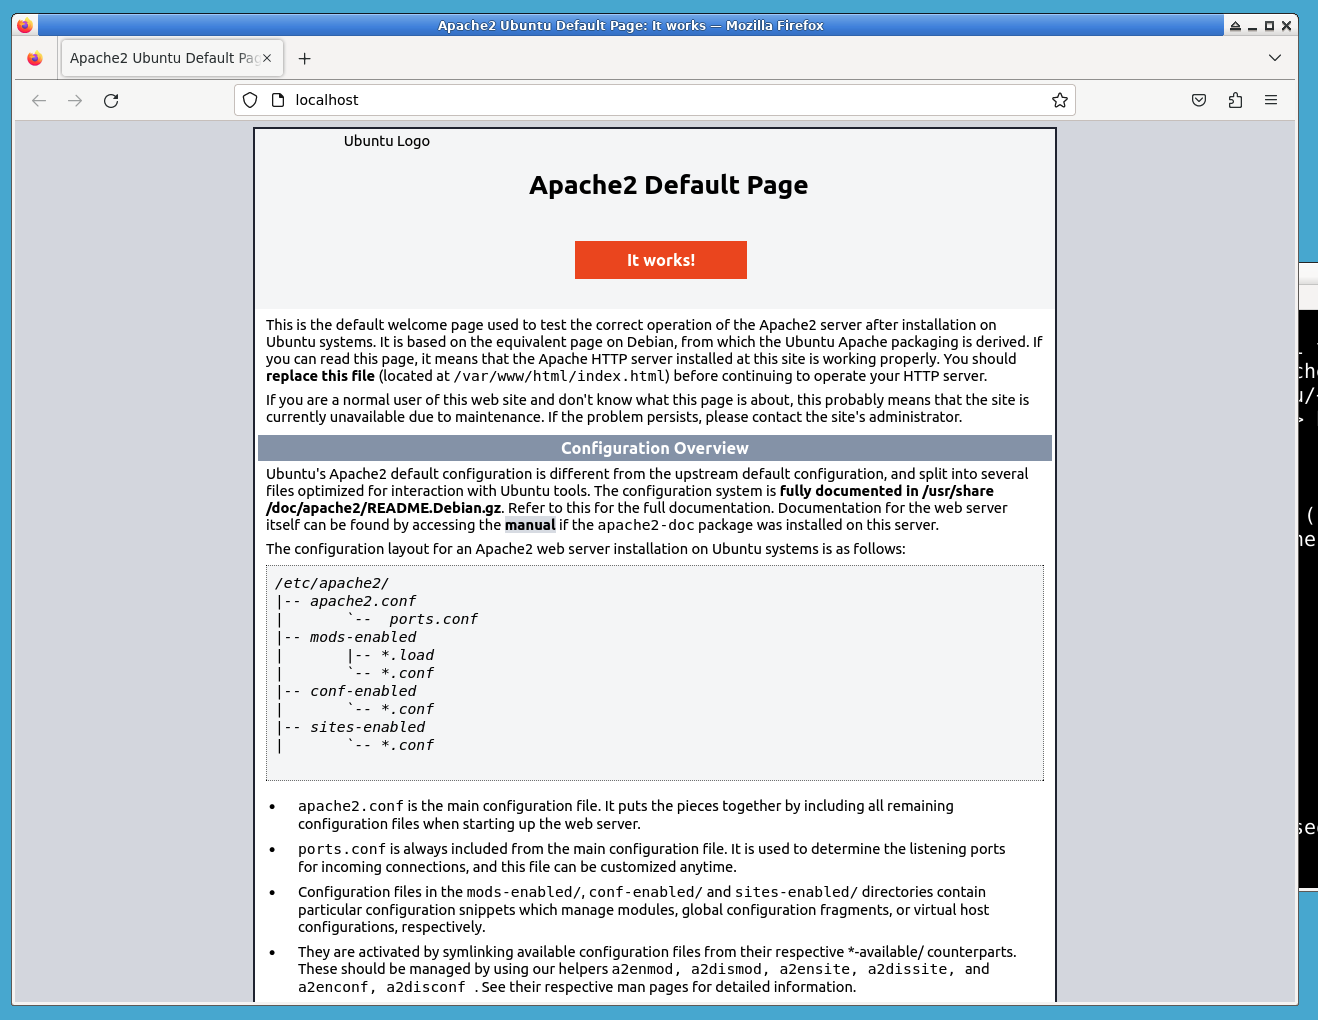 Apache2 default homepage